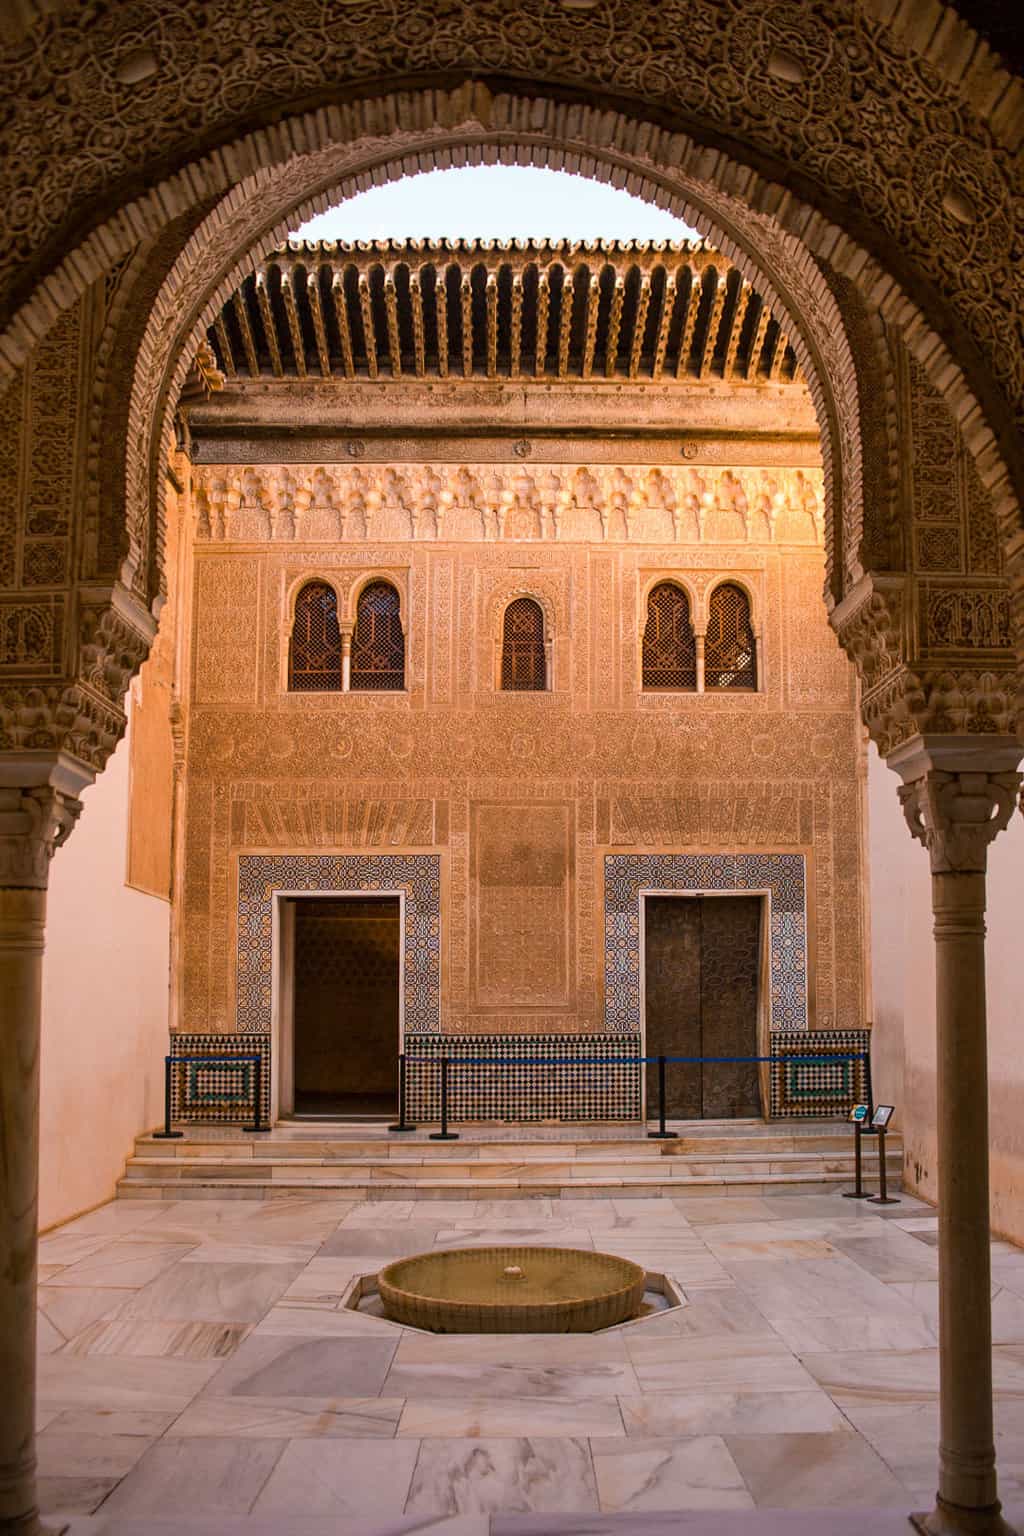 Ornate islamic designs inside the Alhambra in Granada Spain. 